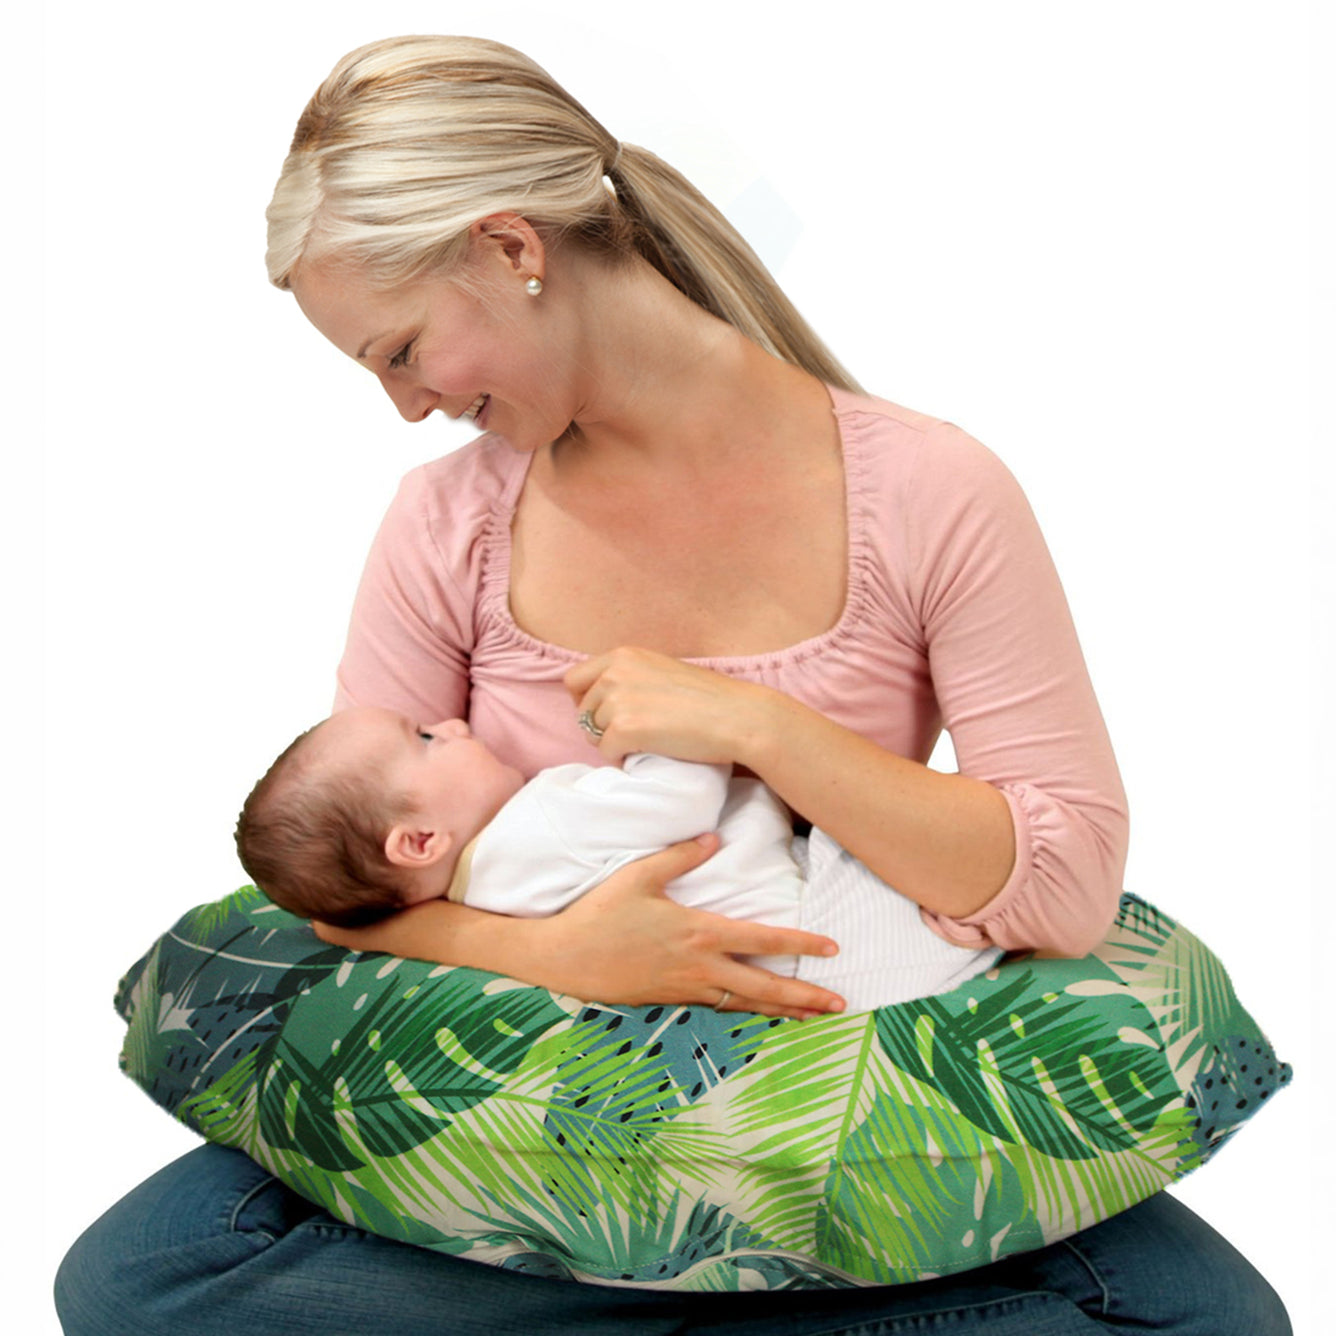 Kradyl Kroft Infant Breast Feeding Pillow